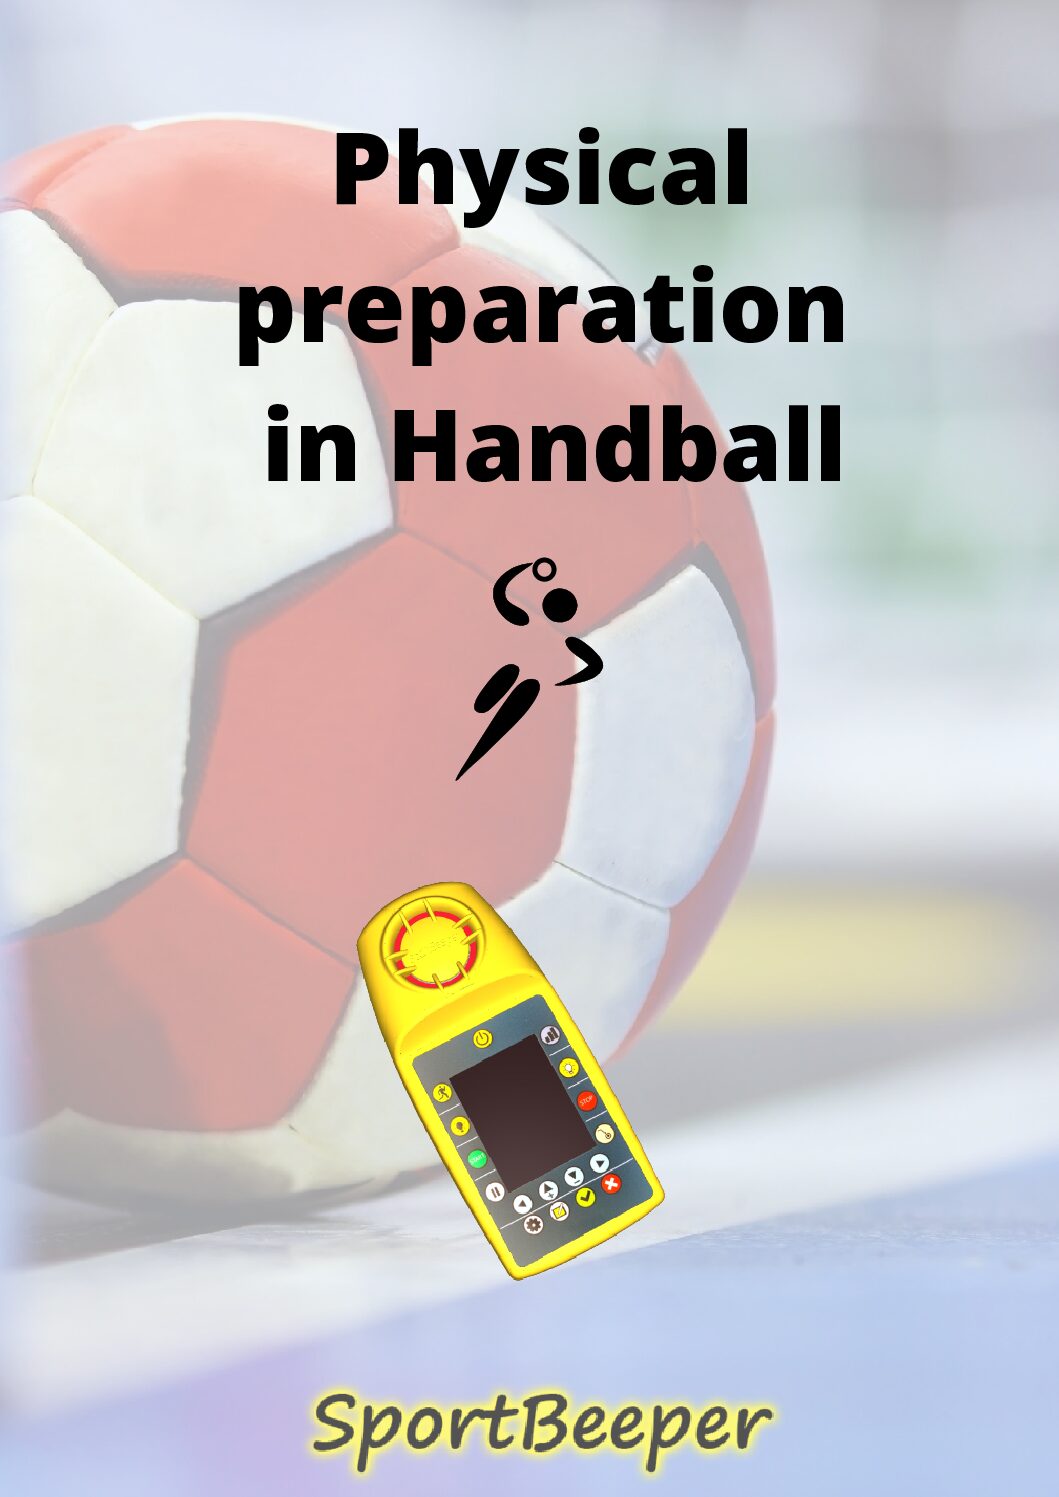 Physical preparation in Handball